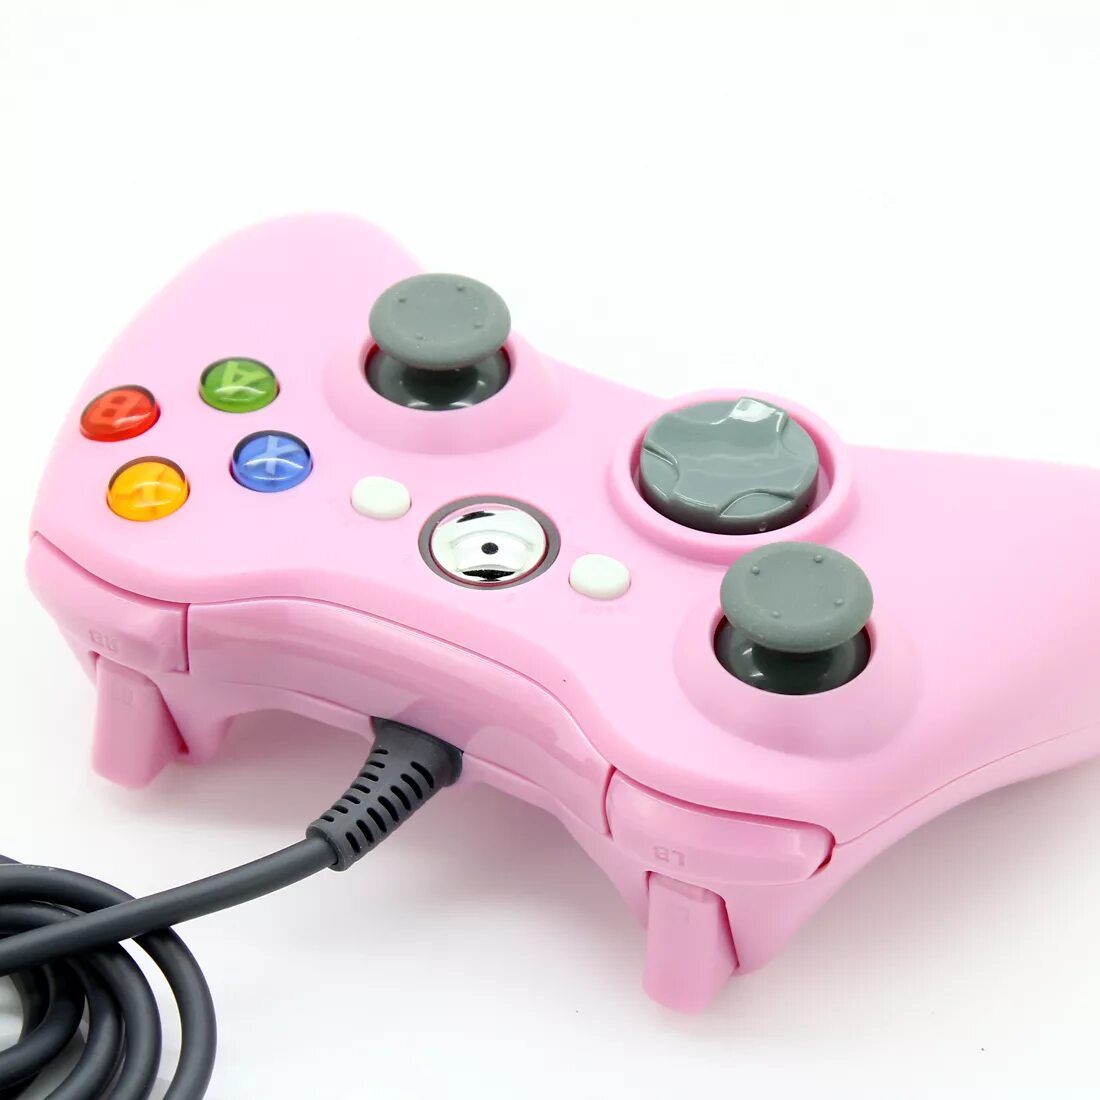 Xbox 360 Controller Pink. Джойстик Xbox 360 розовый. Проводной геймпад Xbox 360 for Windows. Икс бокс джойстик 2014 розовый. Розовый джойстик